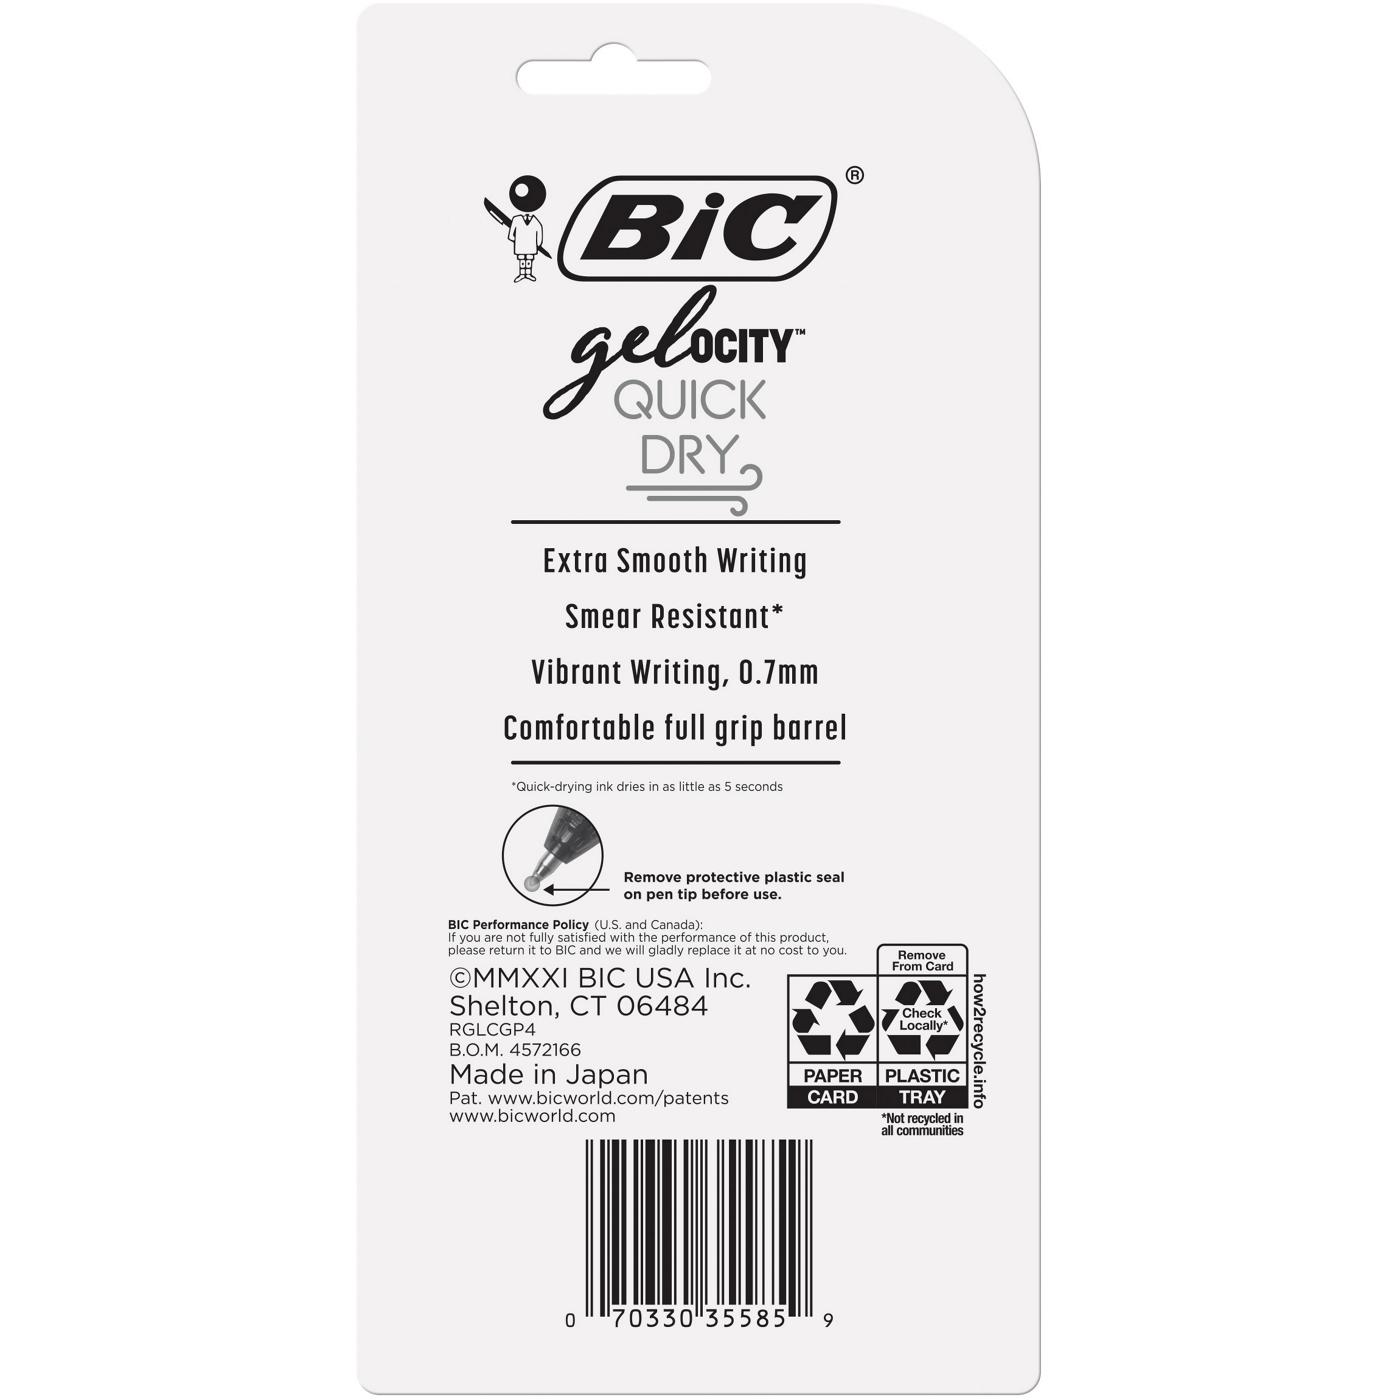 BIC Gel-ocity Quick Dry 0.7mm Gel Pens - Black Ink; image 2 of 2